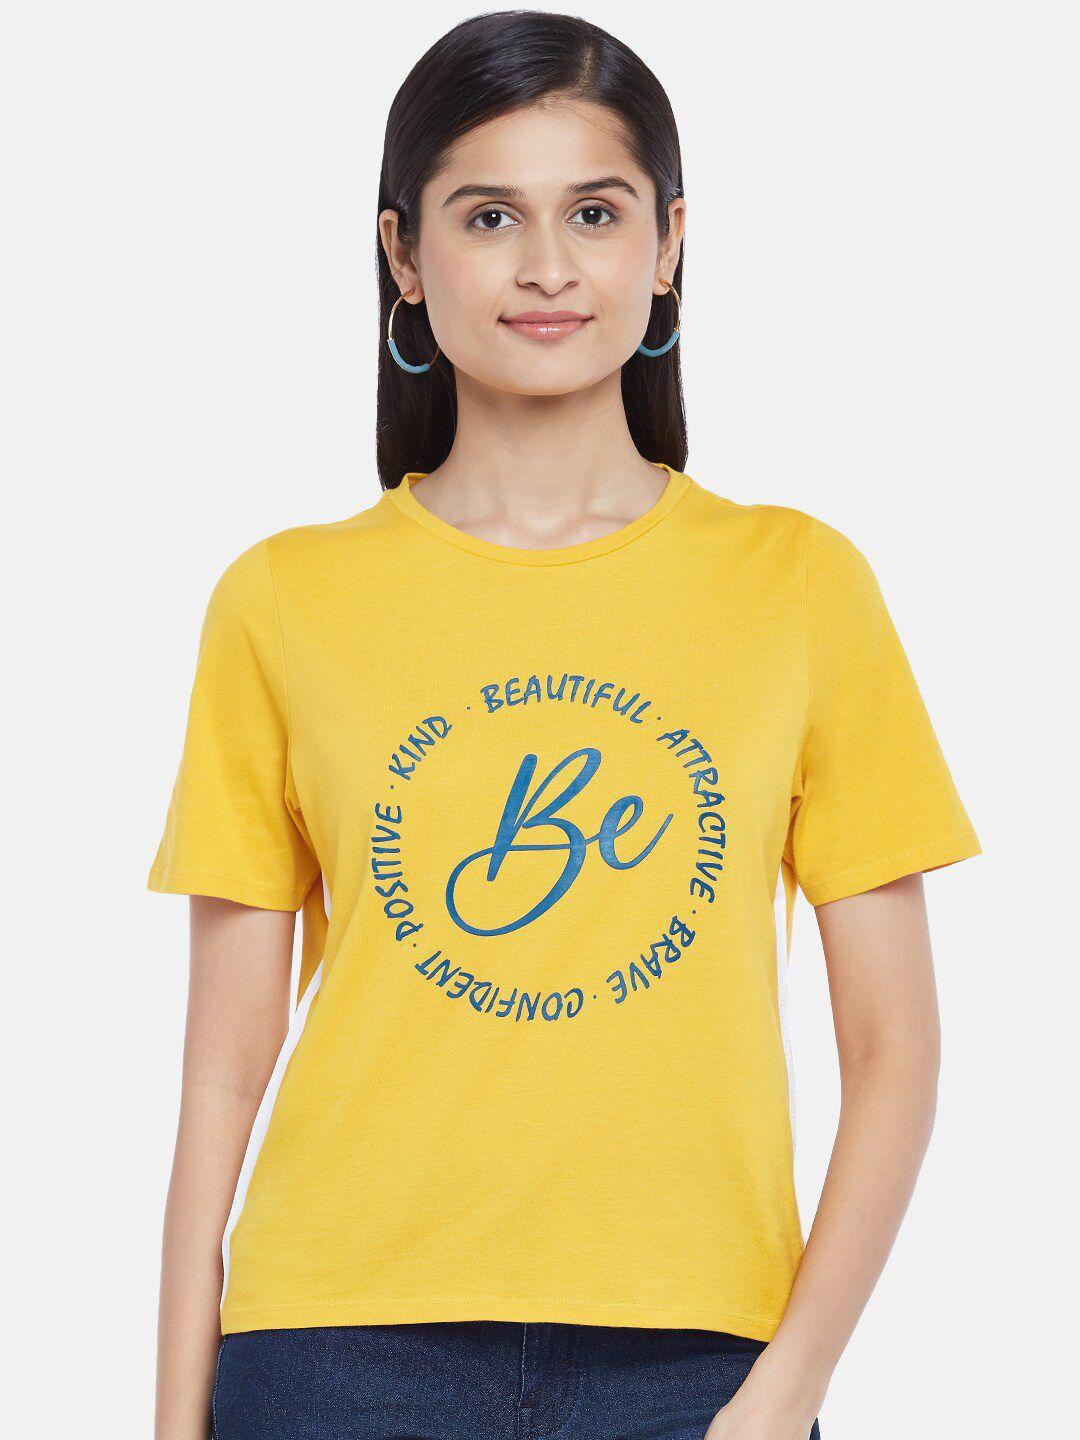 people-women-yellow-typography-printed-t-shirt